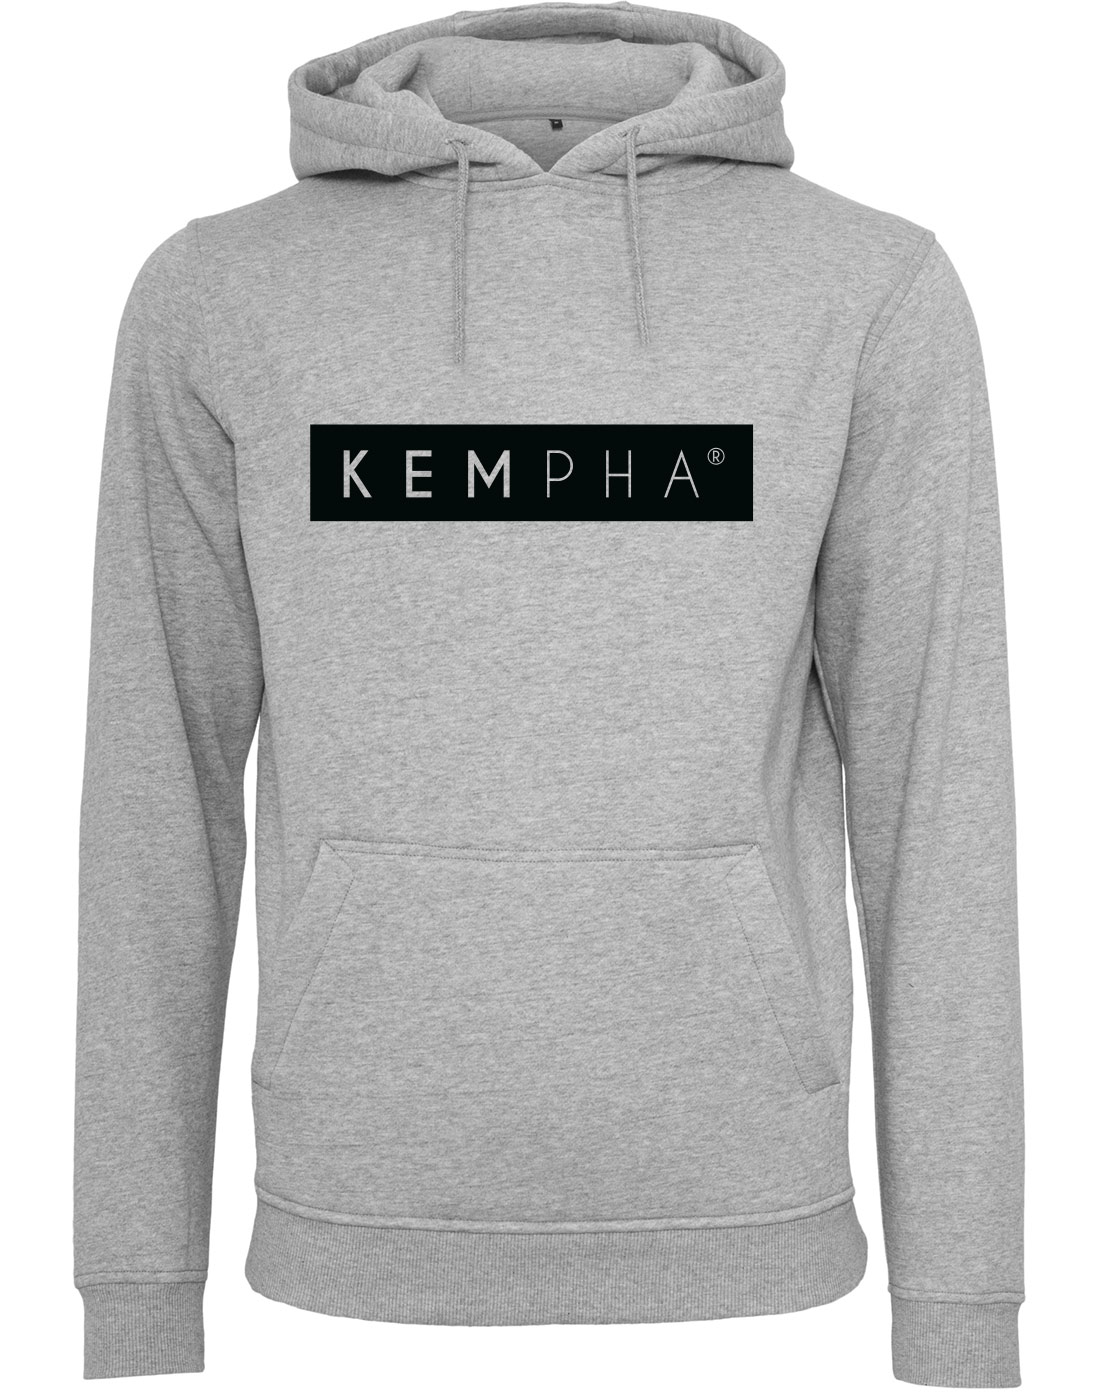 Kempha Premium Hoodie black on heathergrey